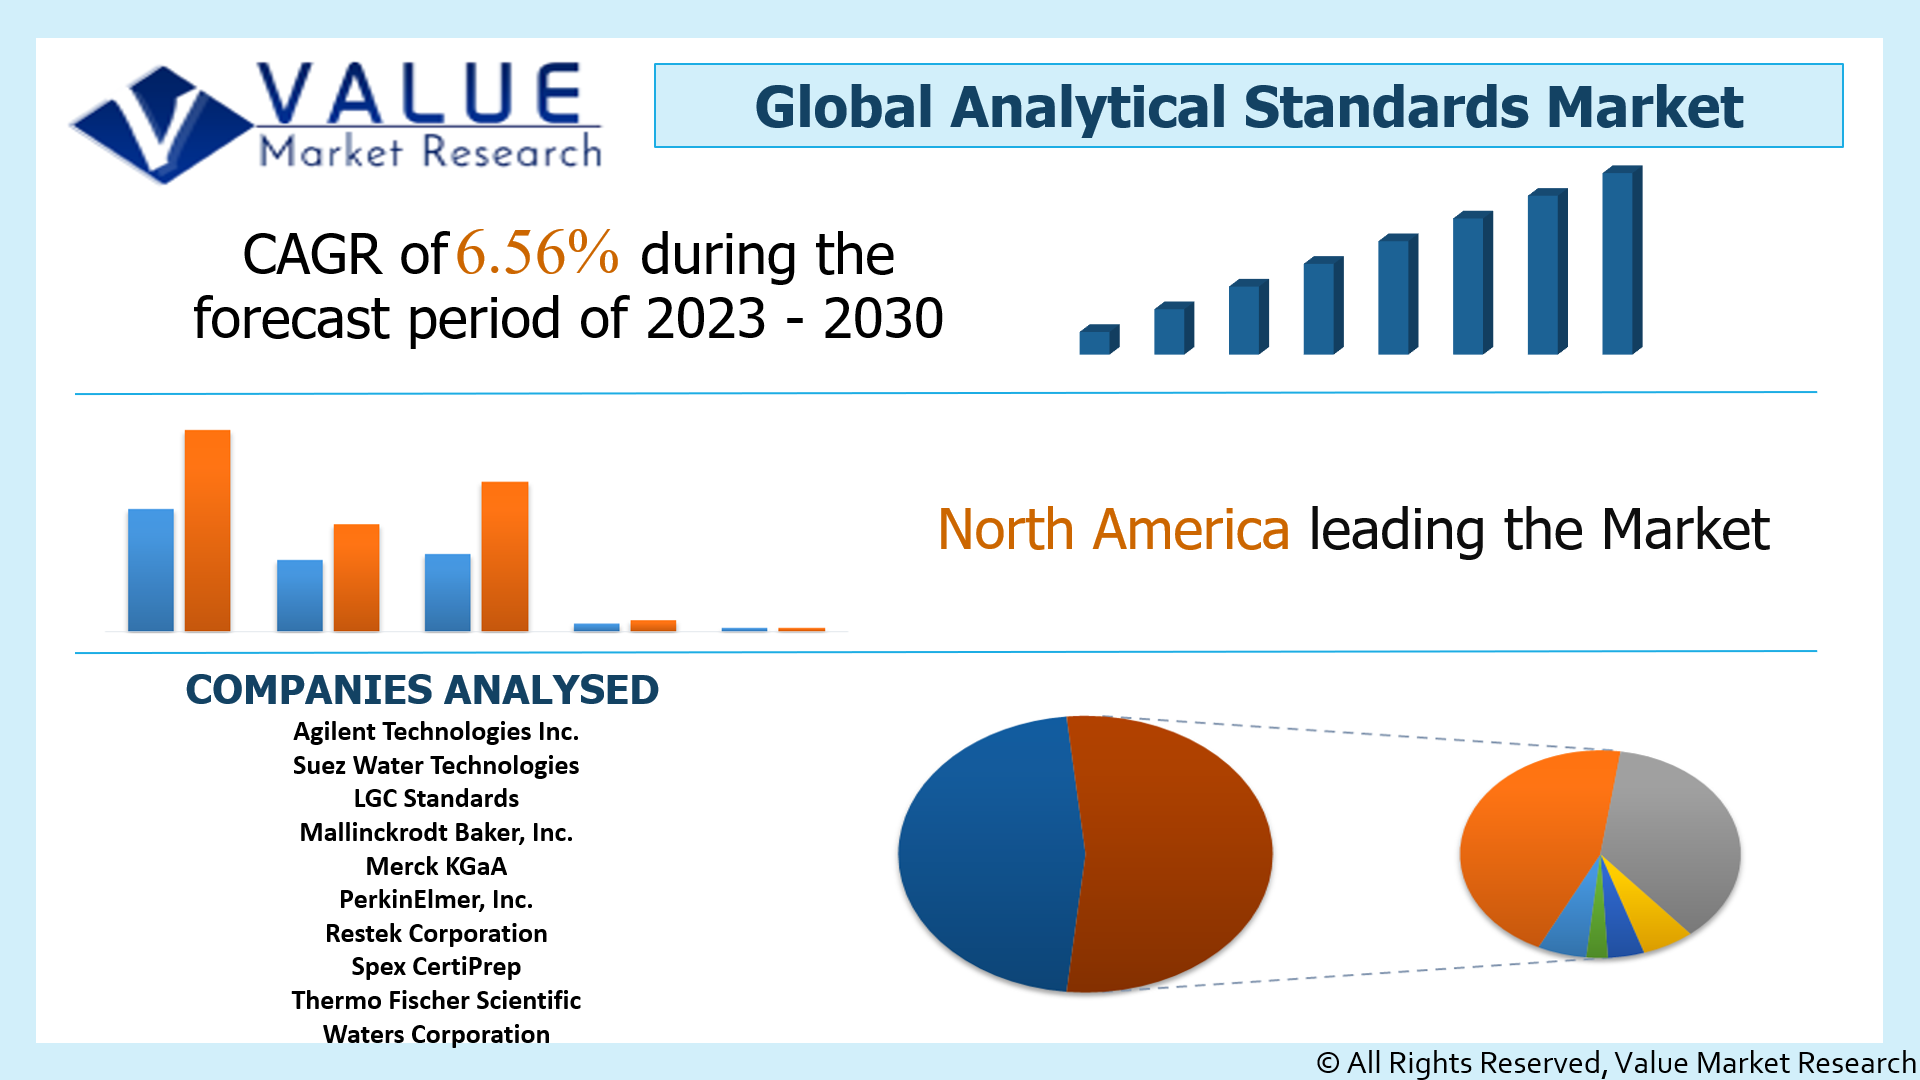 Global Analytical Standards Market Share